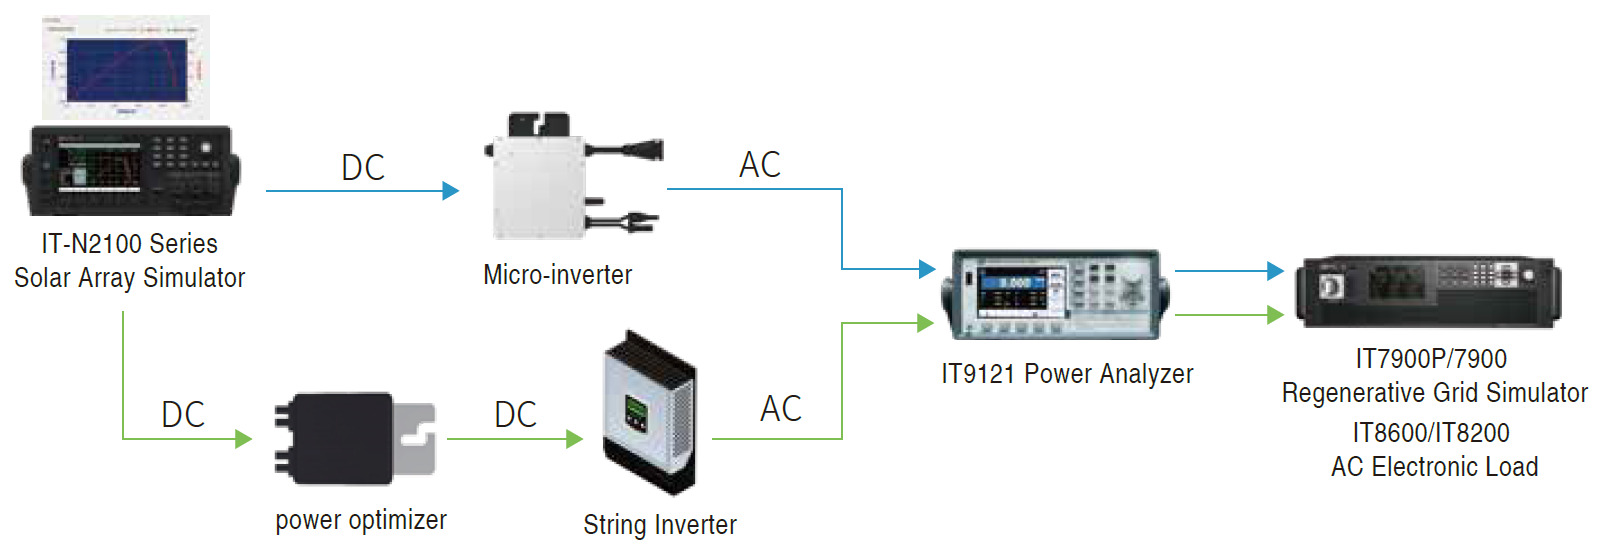 Typical Micro-Inverter Testing Setup